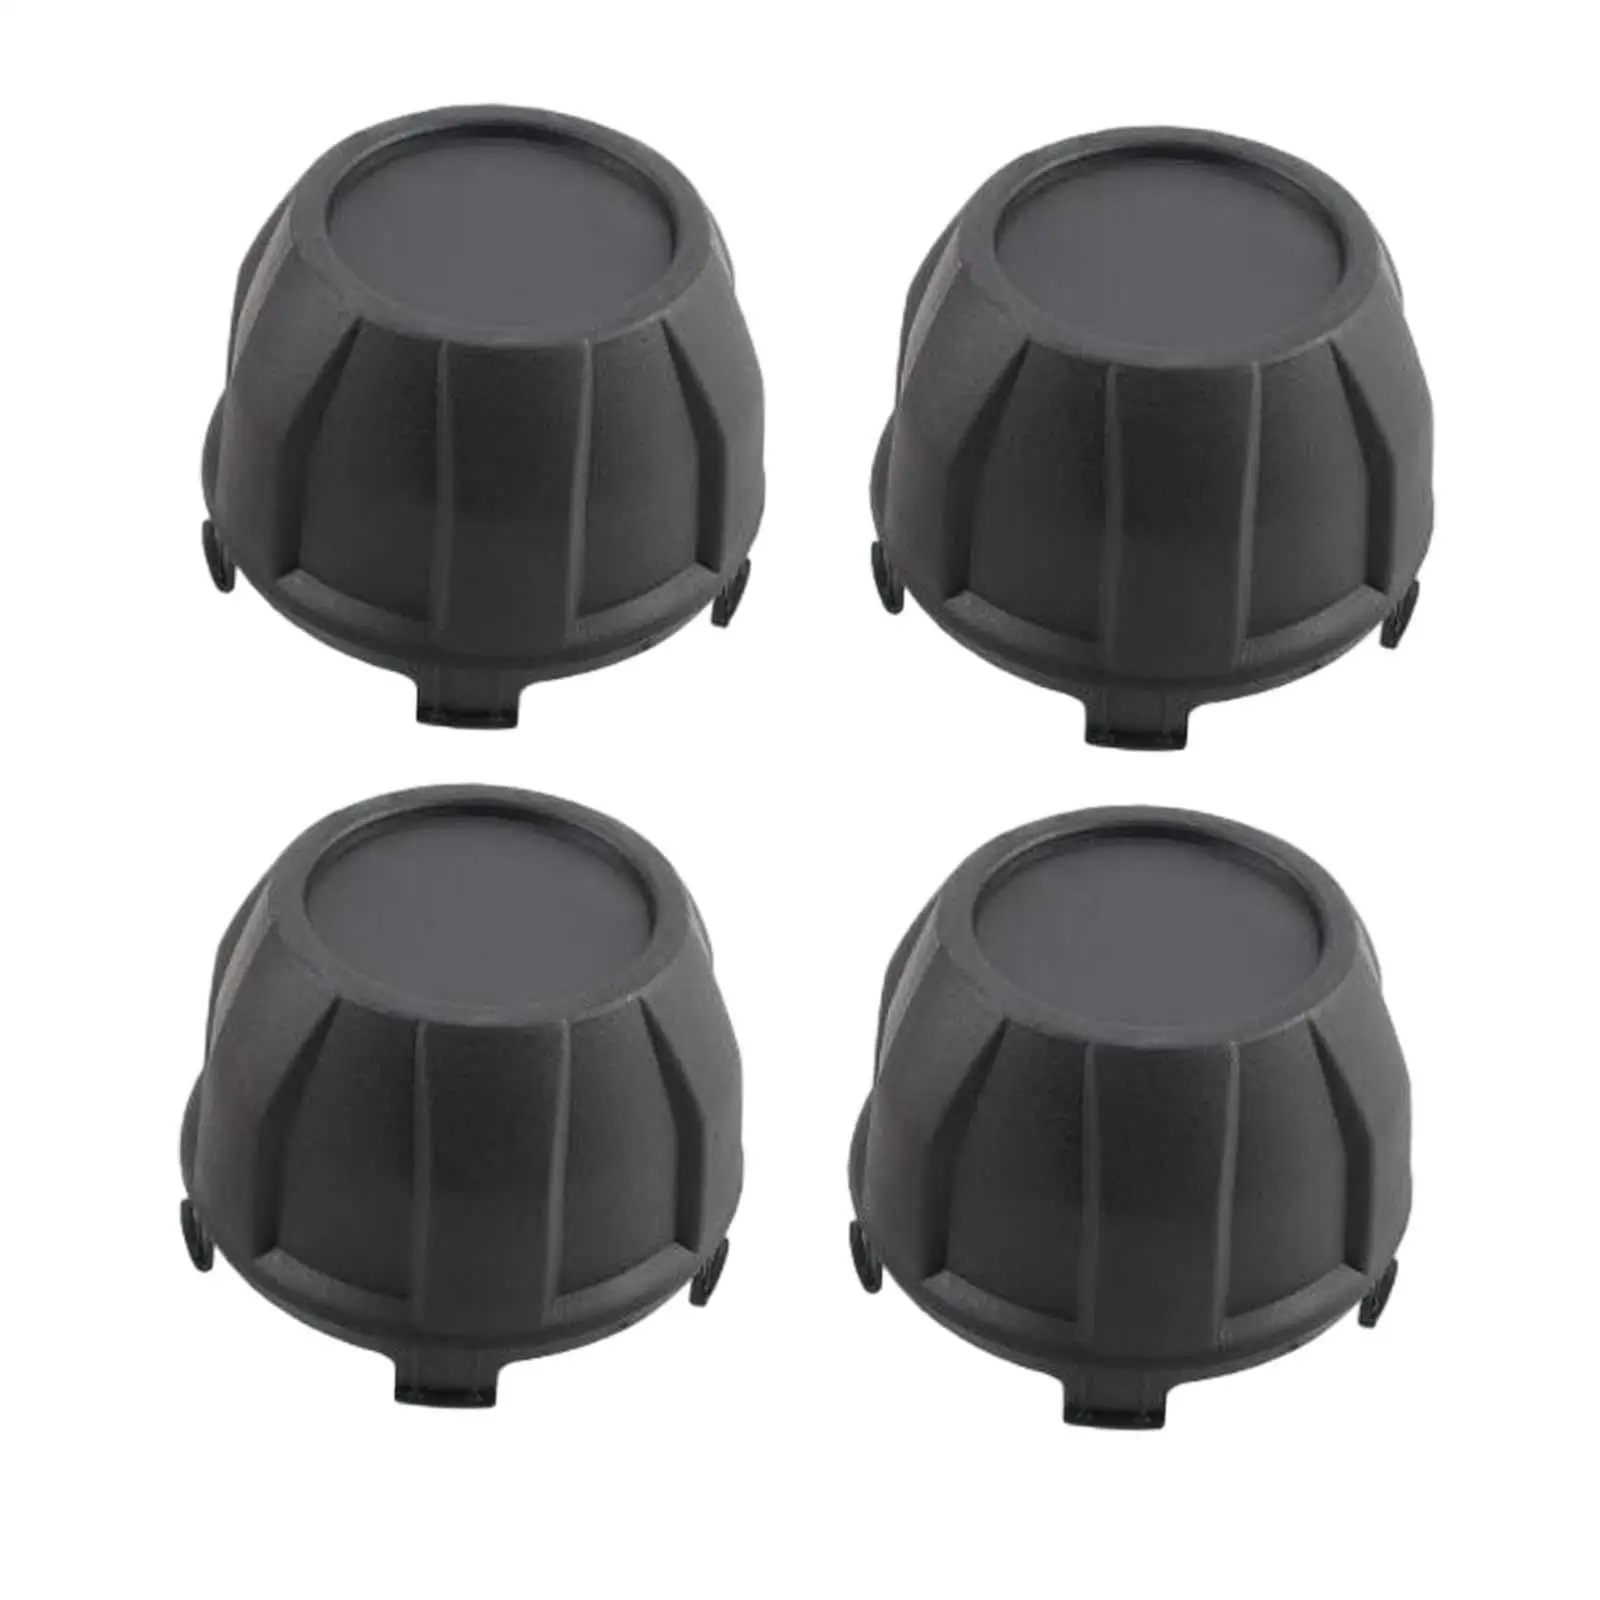 4x Wheel Center Hub Caps Accessories for Kawasaki Krx 1000 Professional